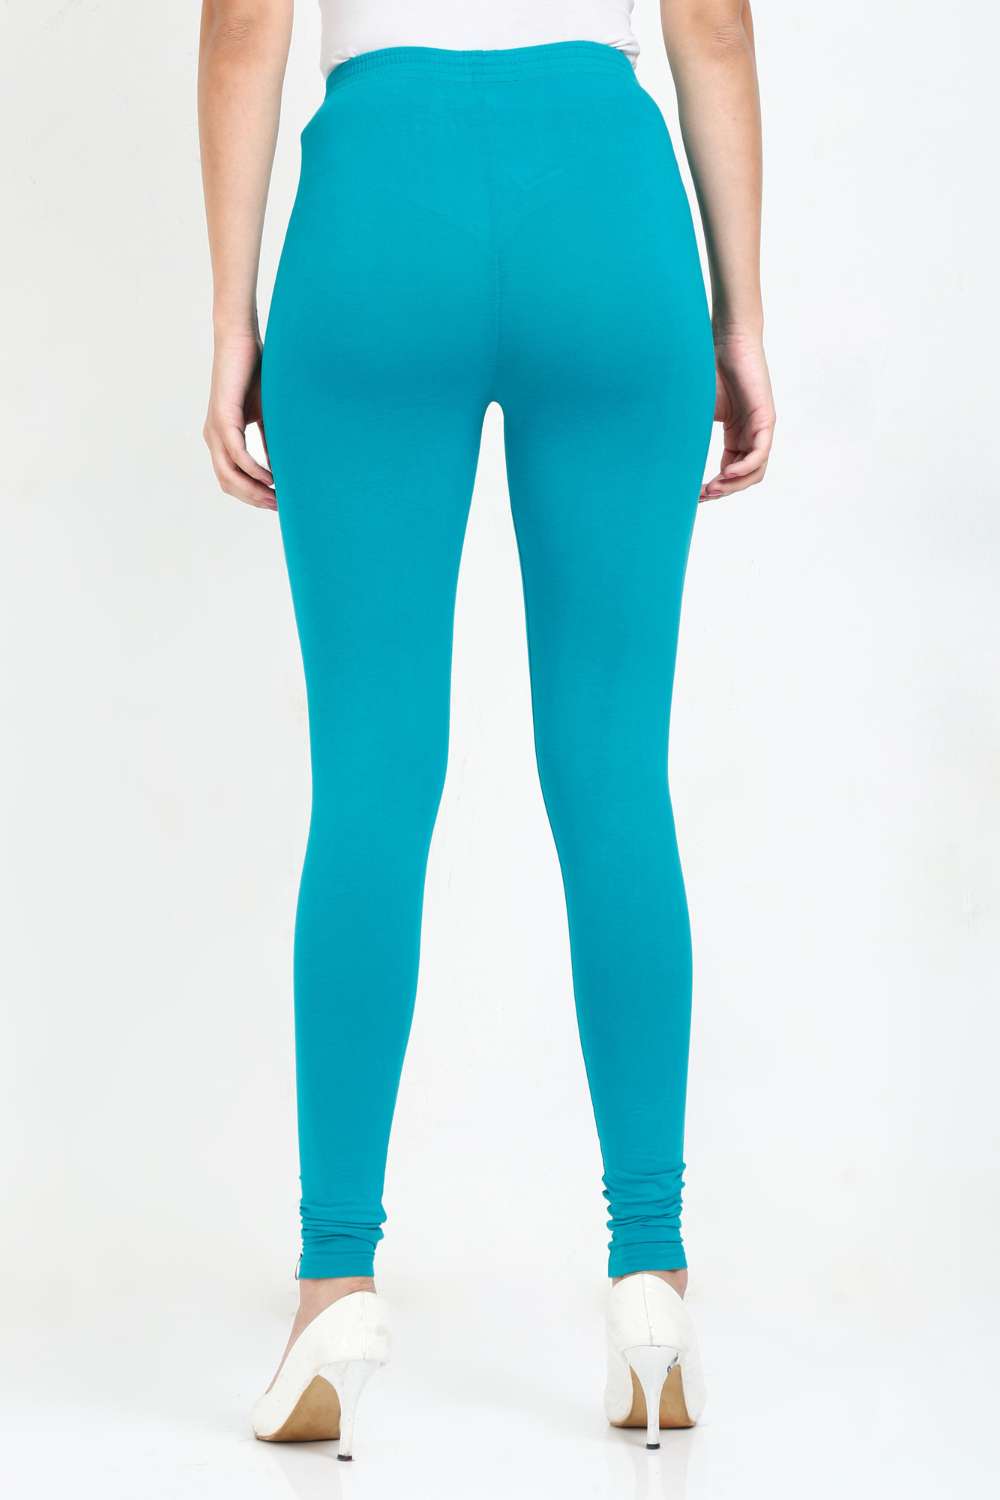 Buy Maxtreme Power Me Aqua Pocket Capri Leggings for Women Online in India